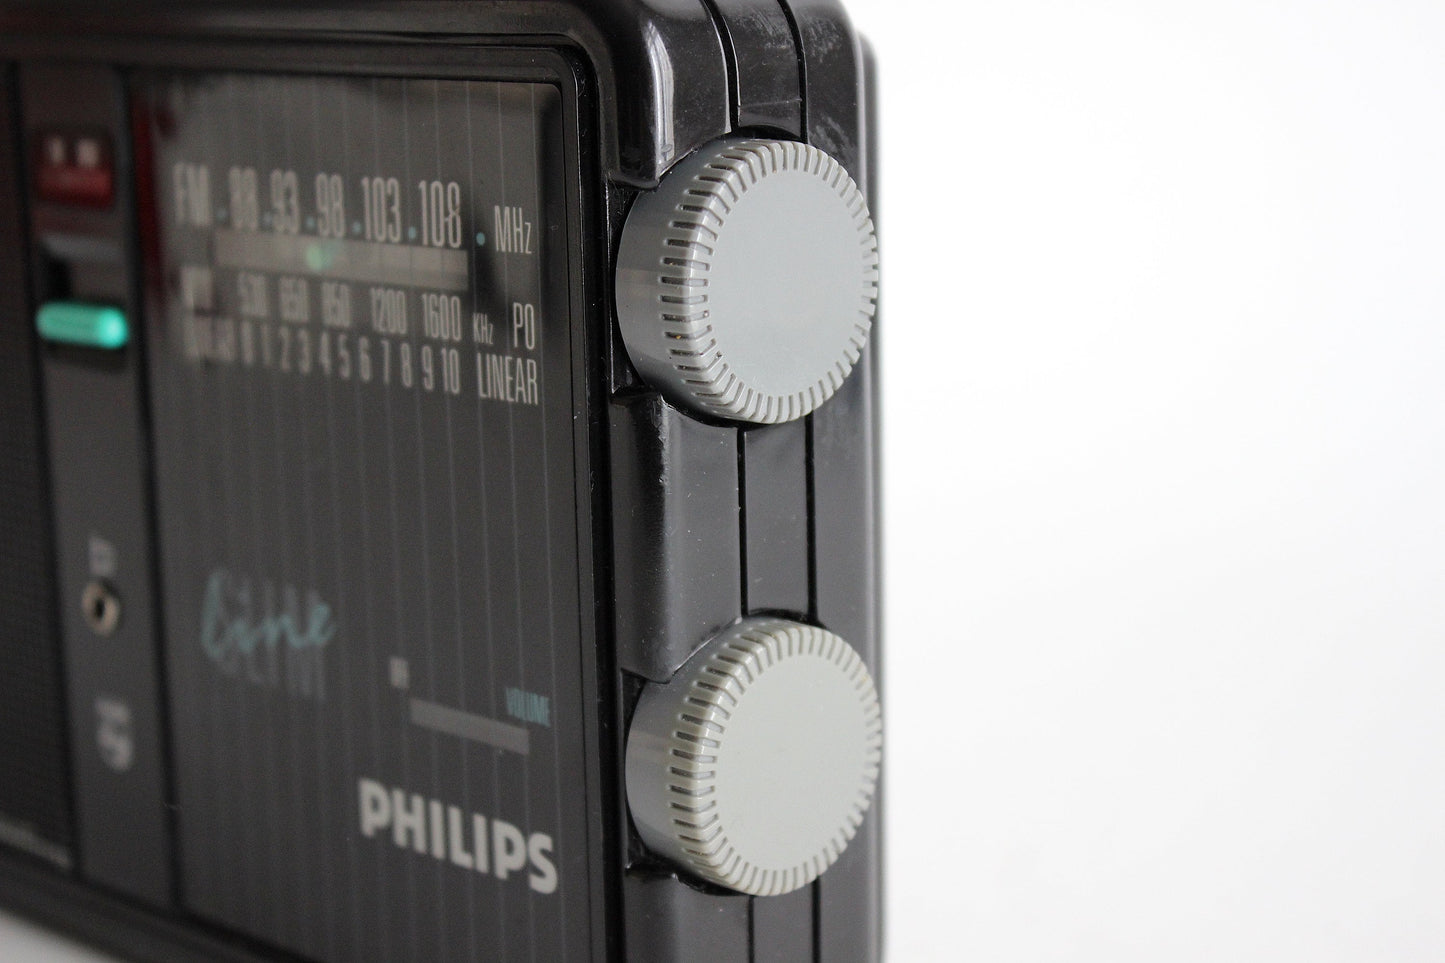 Philips D2042 Vintage Portable Radio: 1985 Hong Kong Masterpiece